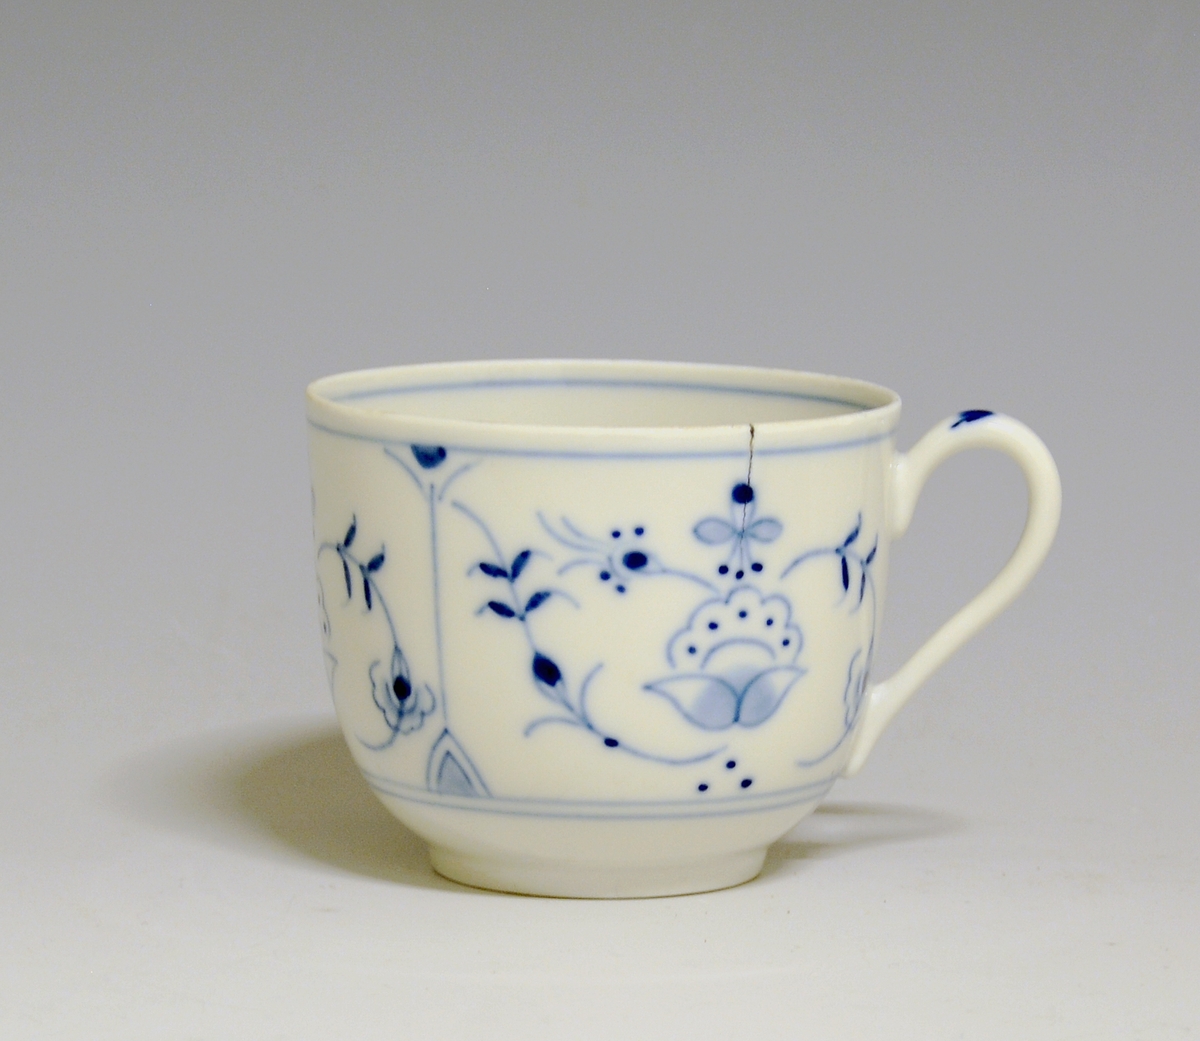 Kaffeskål i porselen. Dekorert med håndmalt stråmønster i blått. 

Dekor: "Porsgrunnsmønsteret", variant av stråmønster, antagelig av Hans Flygenring.